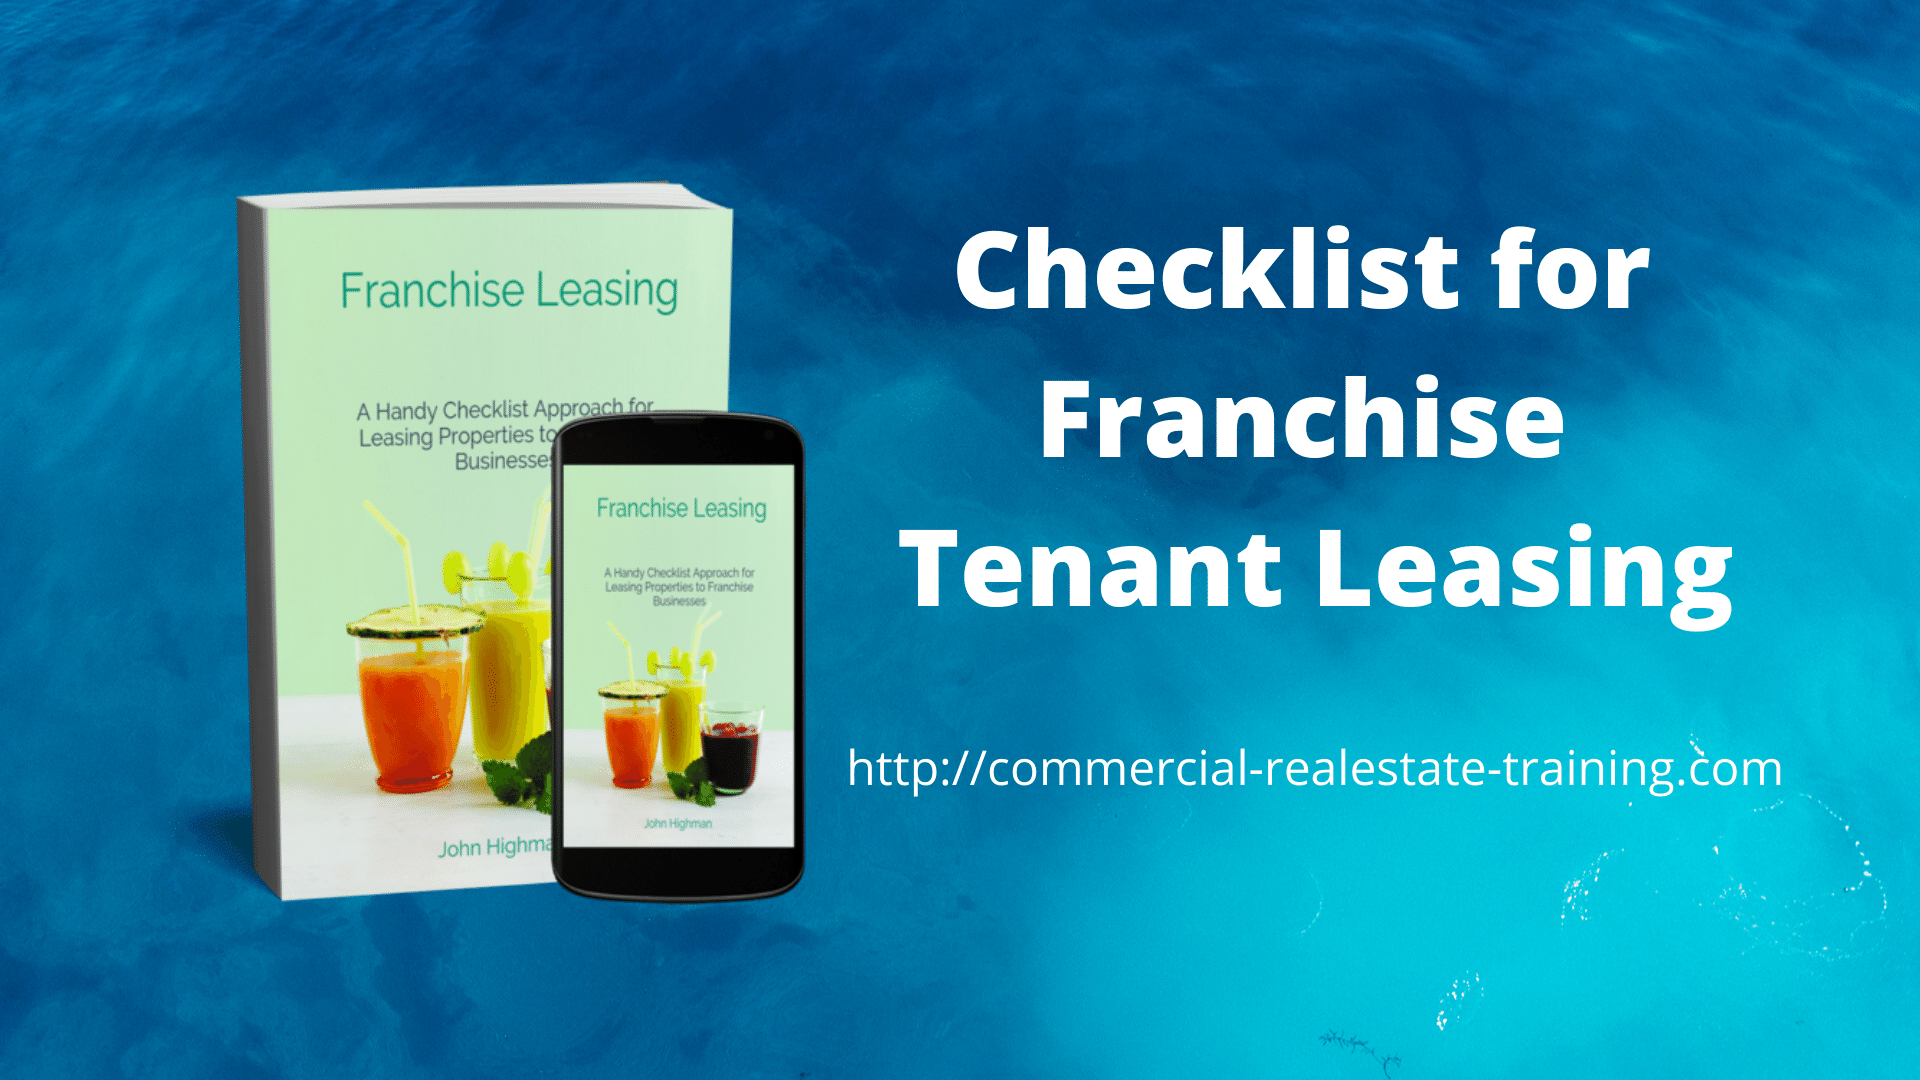 franchise tenant leasing checklist book